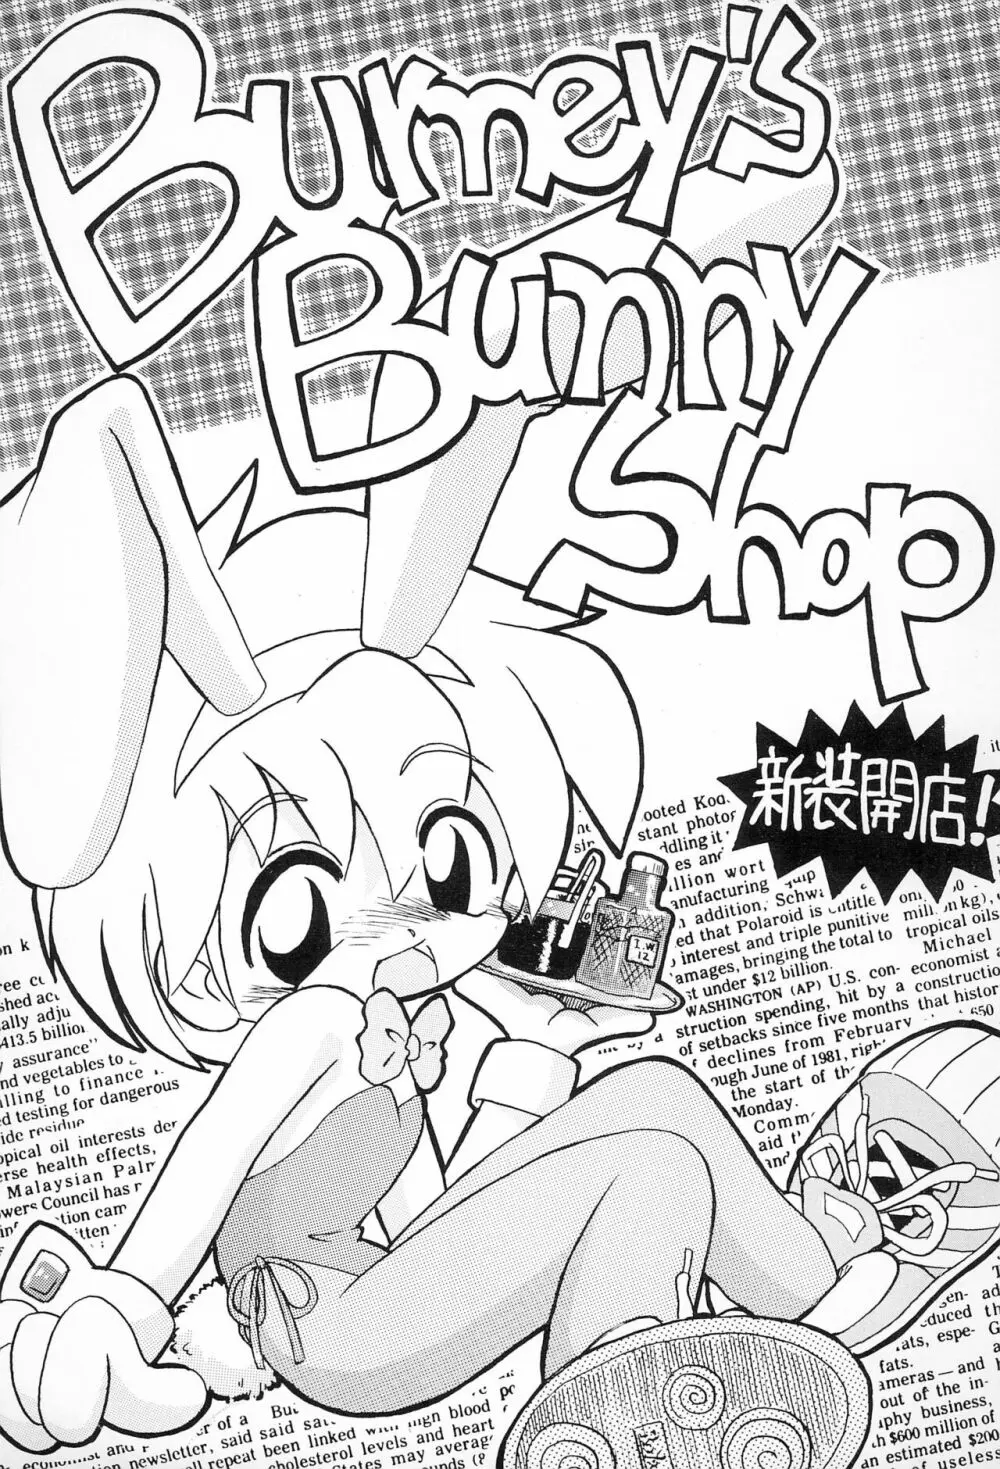 Burney’s Bunny Shop 新装開店!